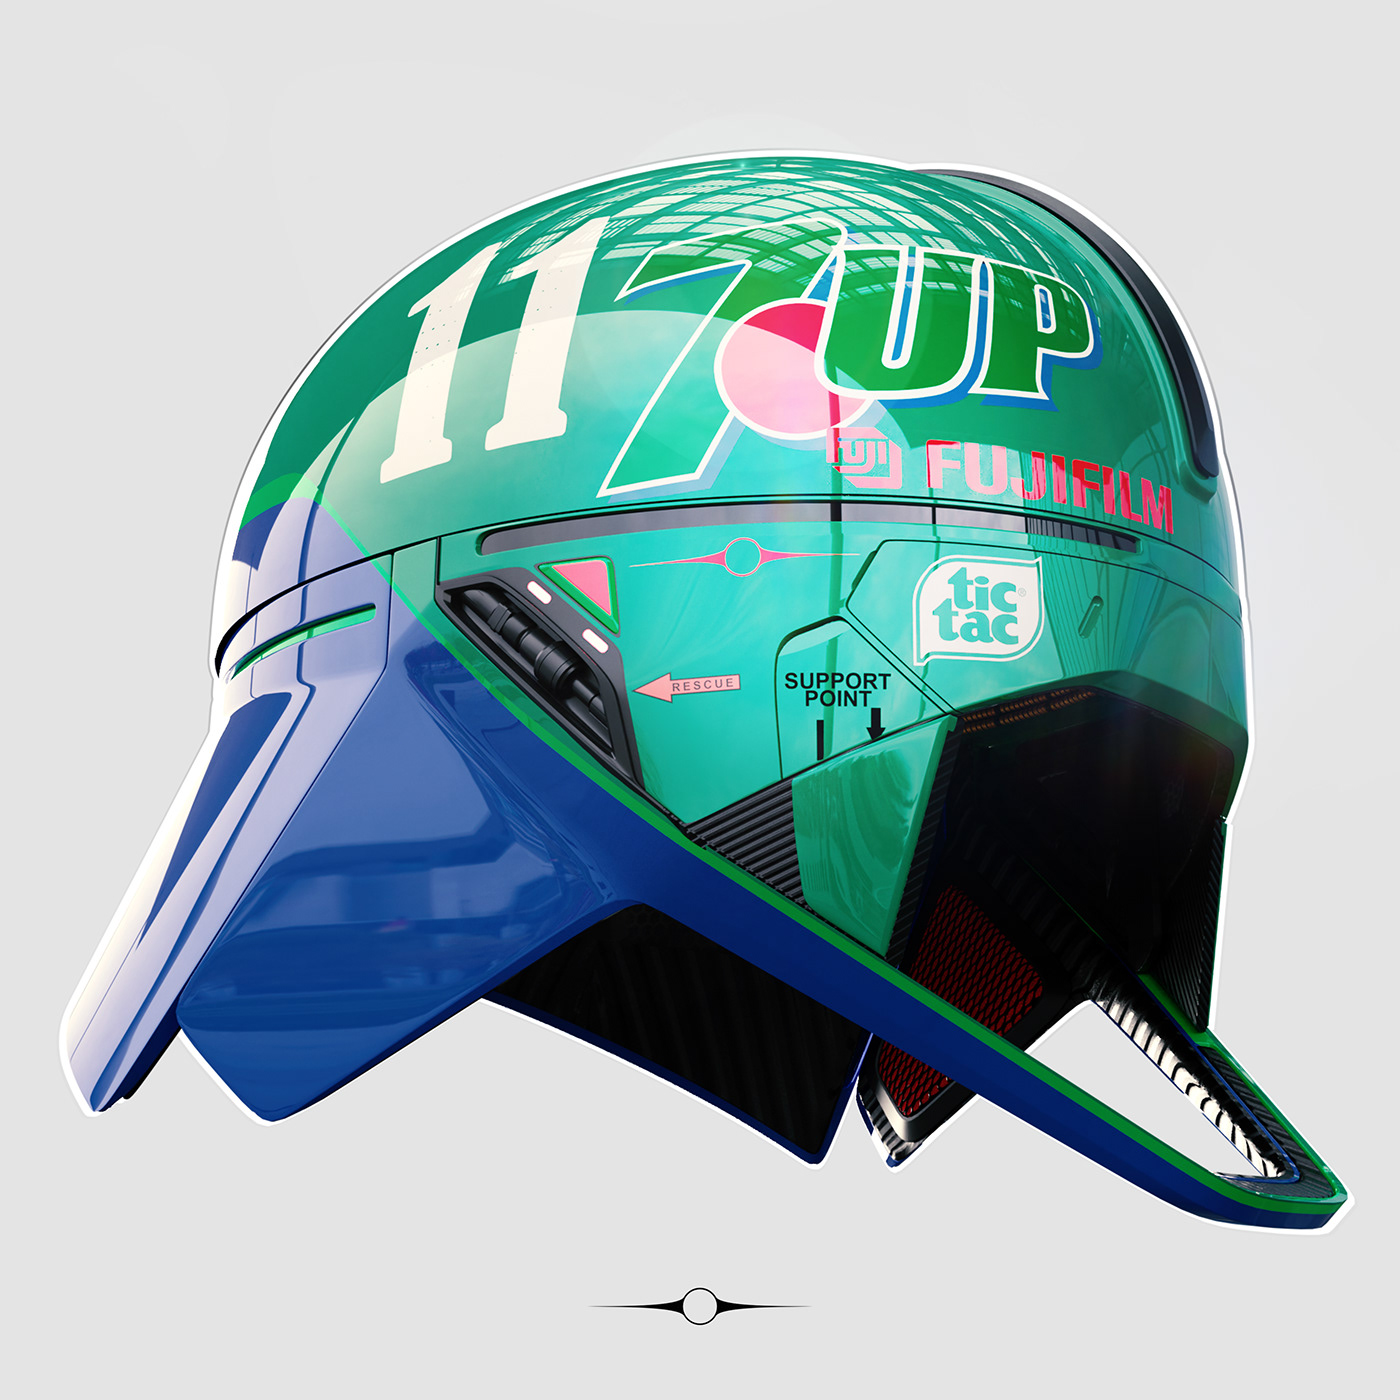 Helmet 3D Render blender concept Digital Art  artwork f1 Racing Motorsport